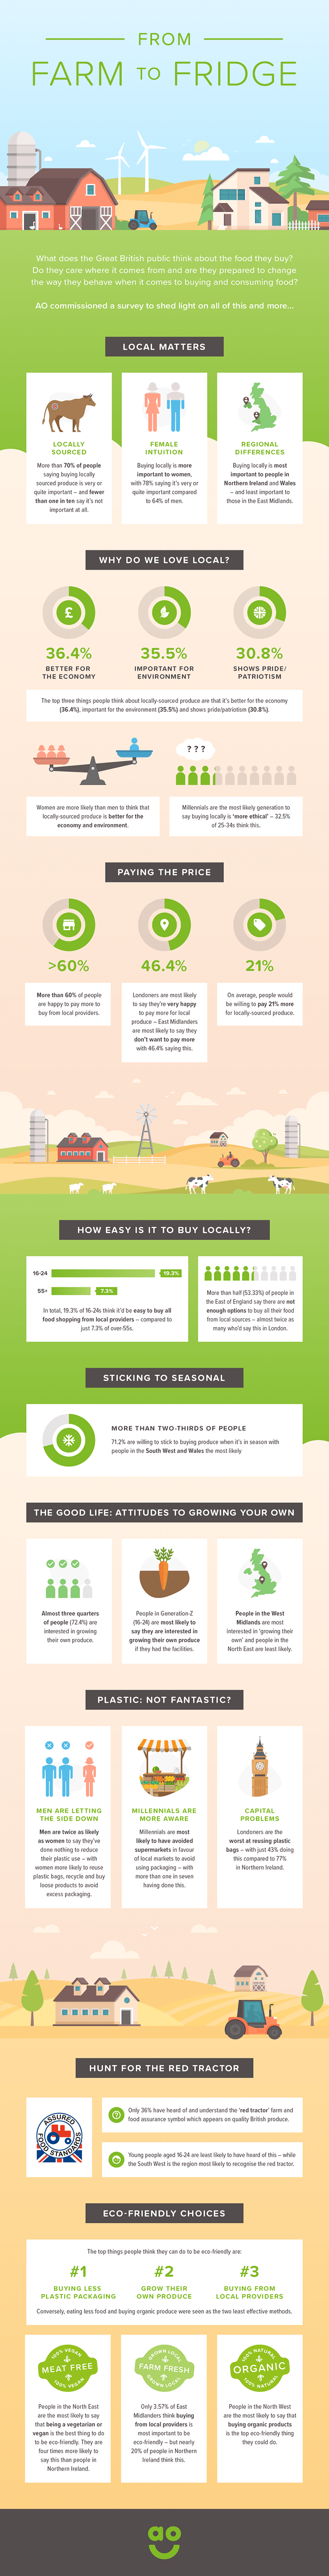 Farm-to-Fridge_Infographic